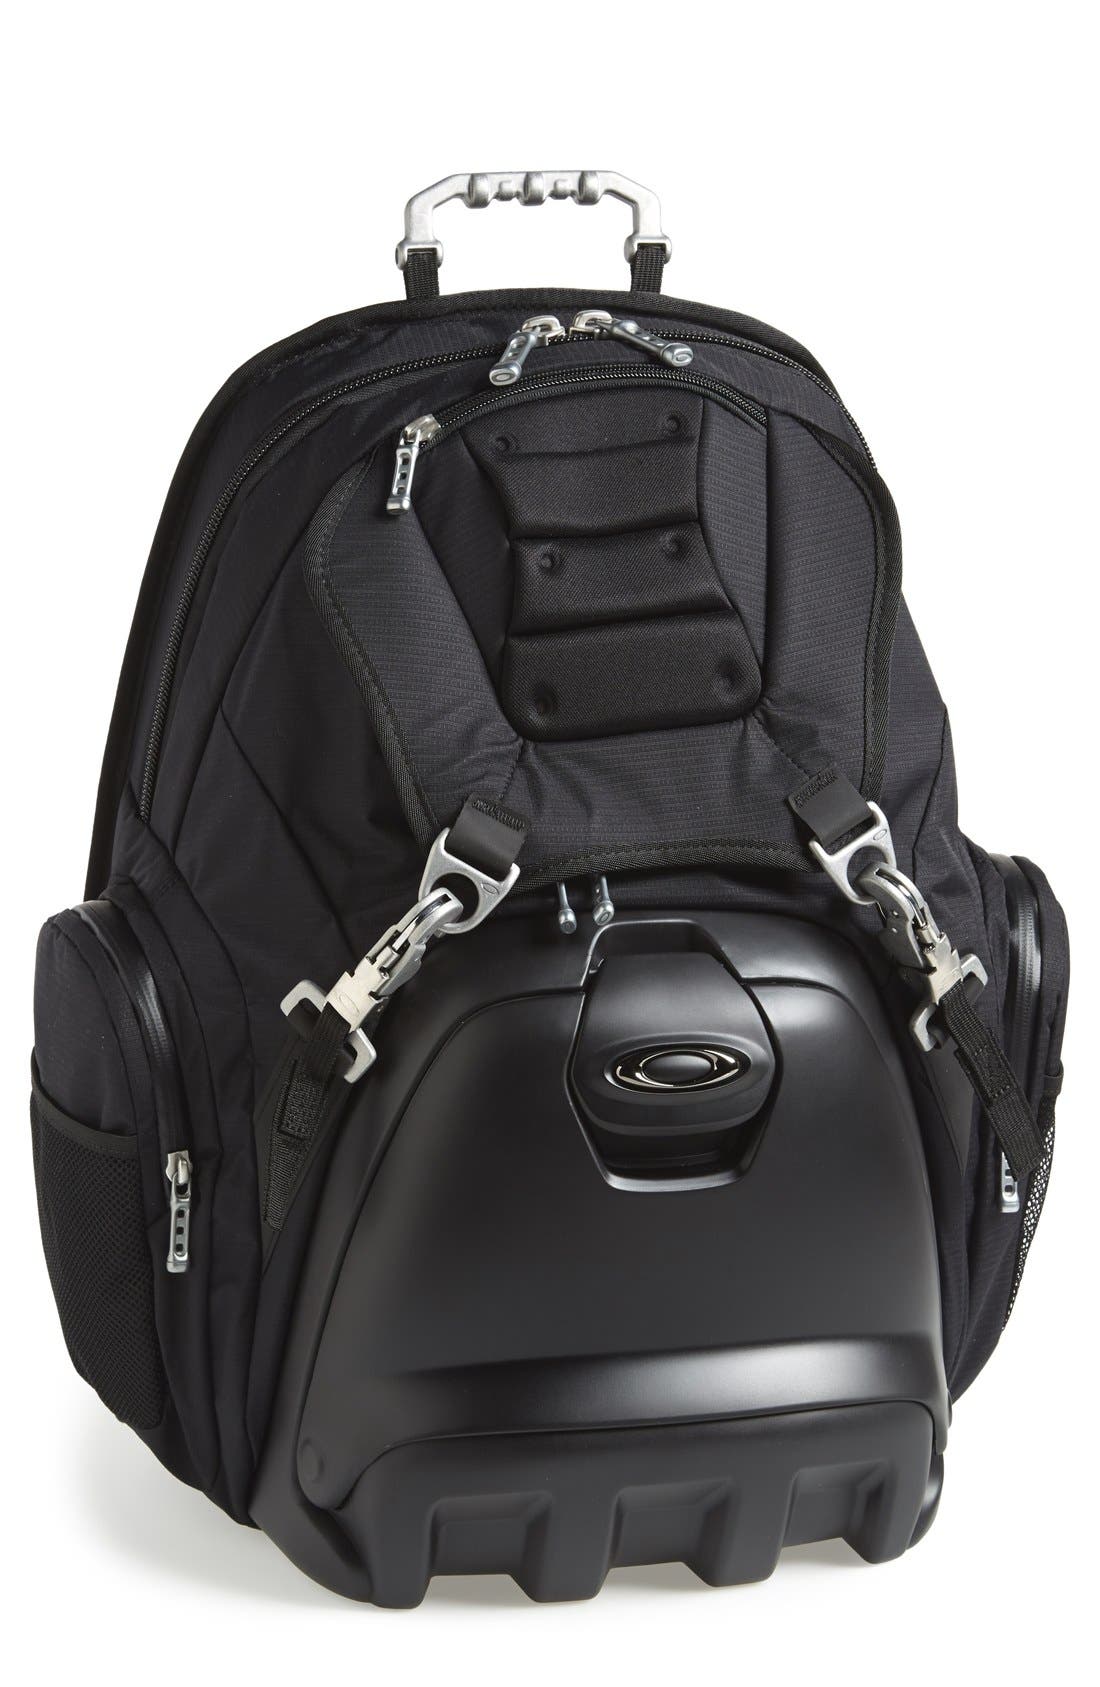 Oakley 'Lunch Box' Cooler Backpack 